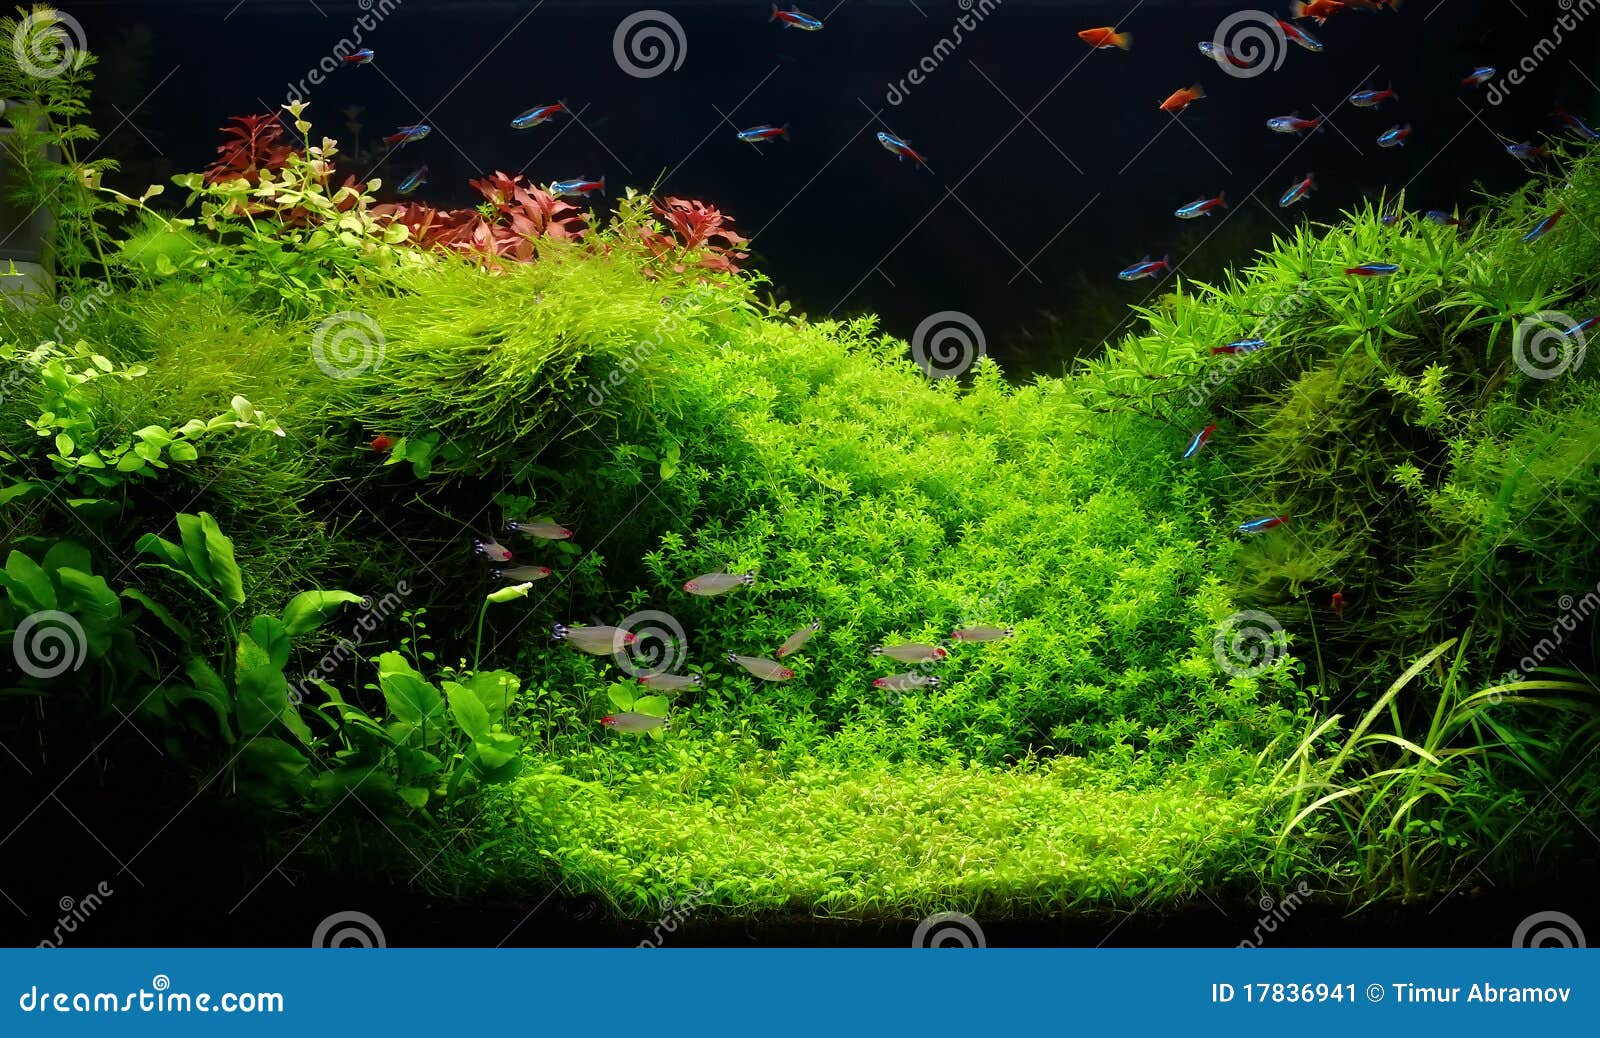 nature freshwater aquarium in takasi amano style